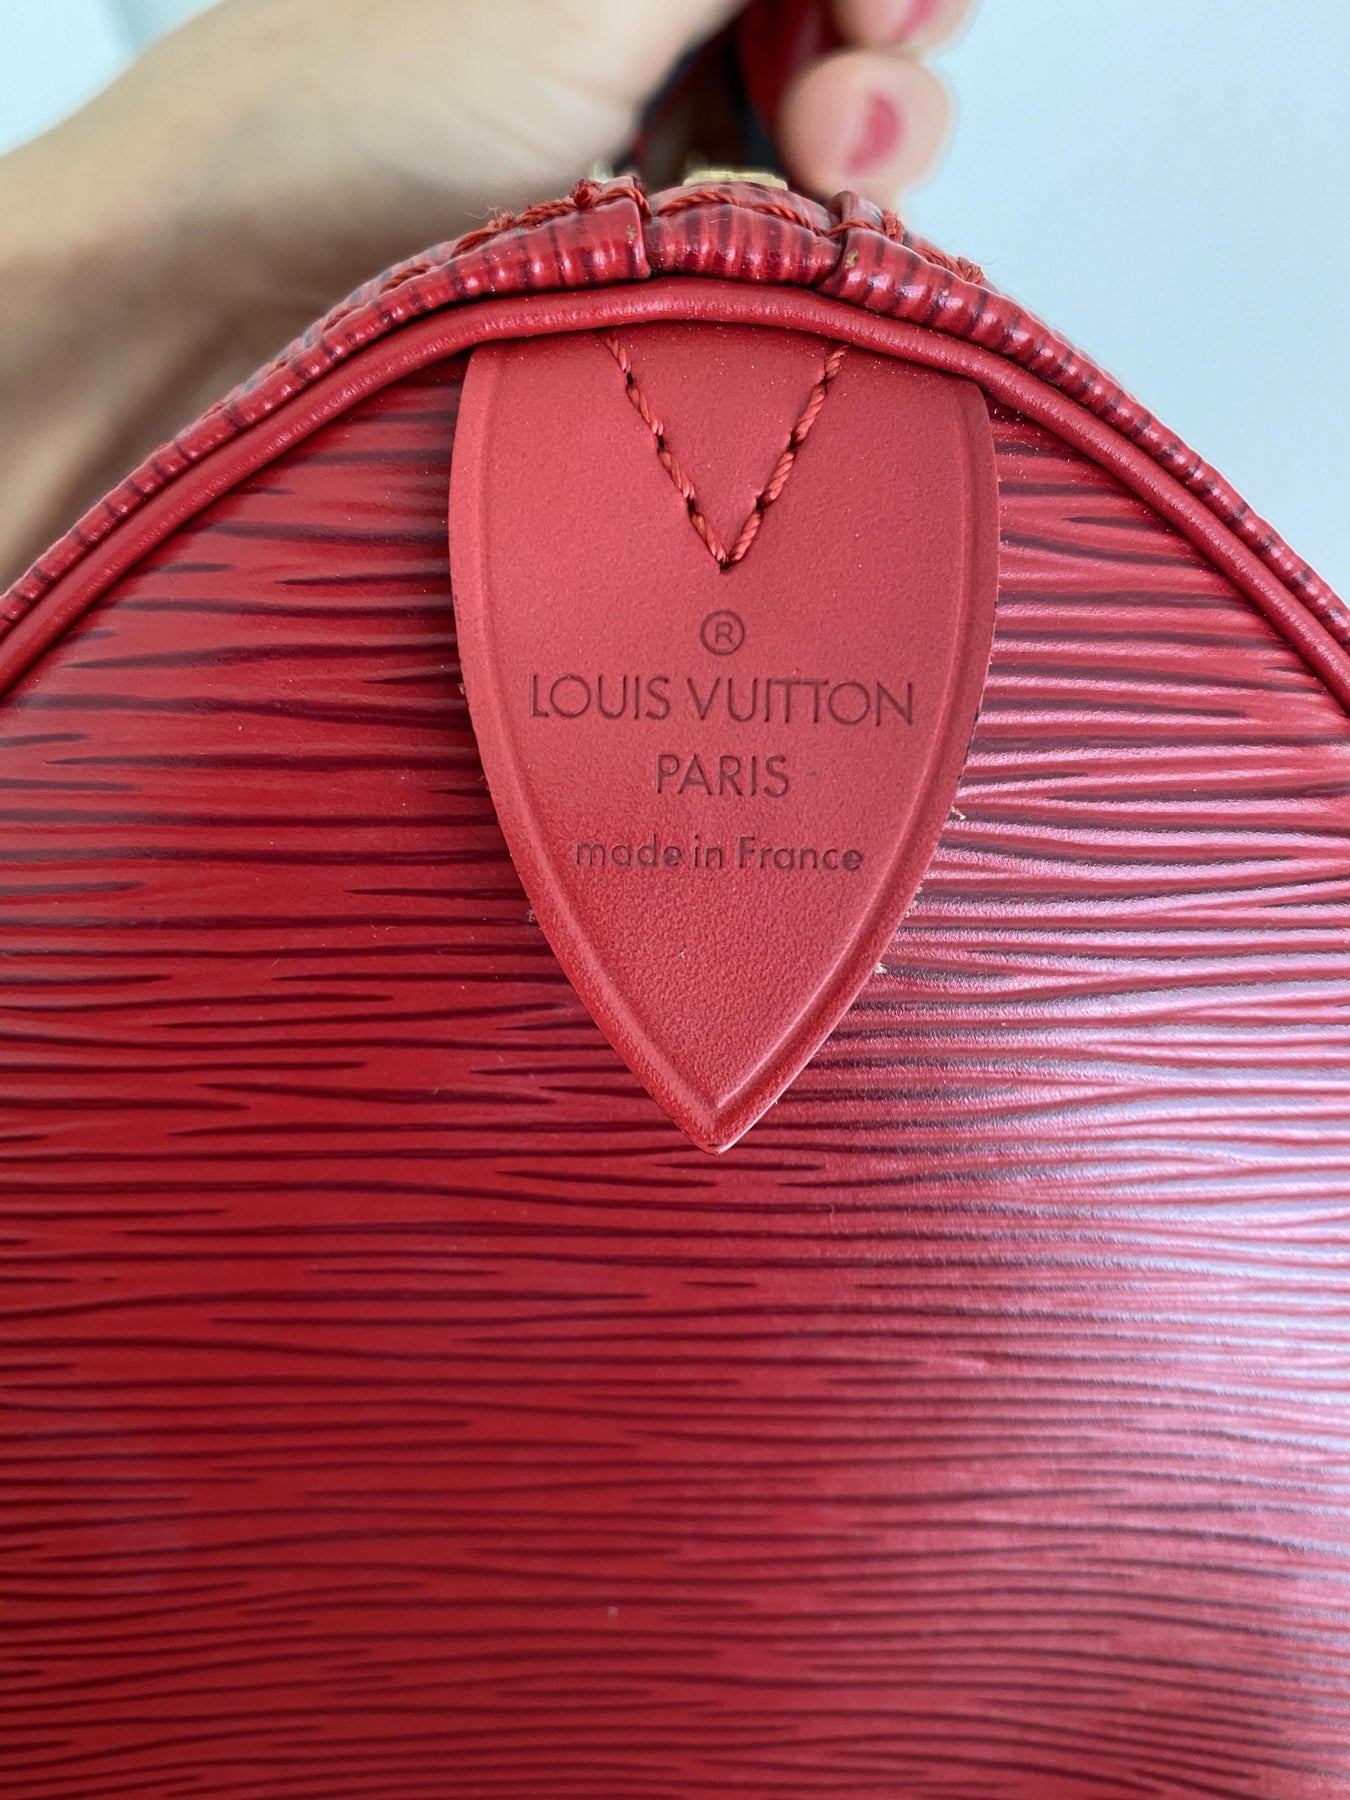 Auth Louis Vuitton Epi Speedy 40 M42987 Women's Boston Bag,Handbag